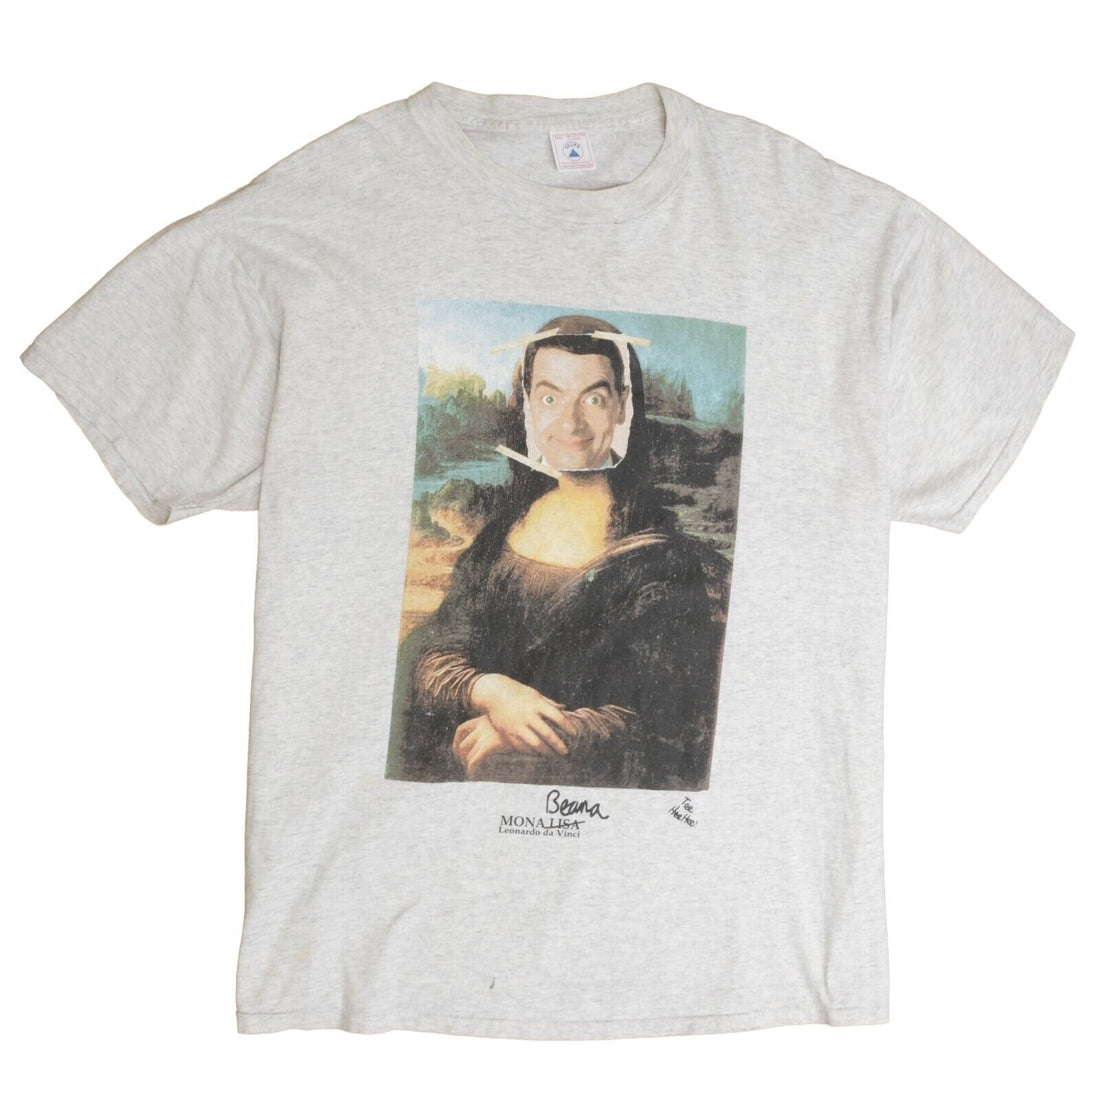 Vintage Mr Bean Mona Lisa Art Parody T-Shirt Size 2XL 90s